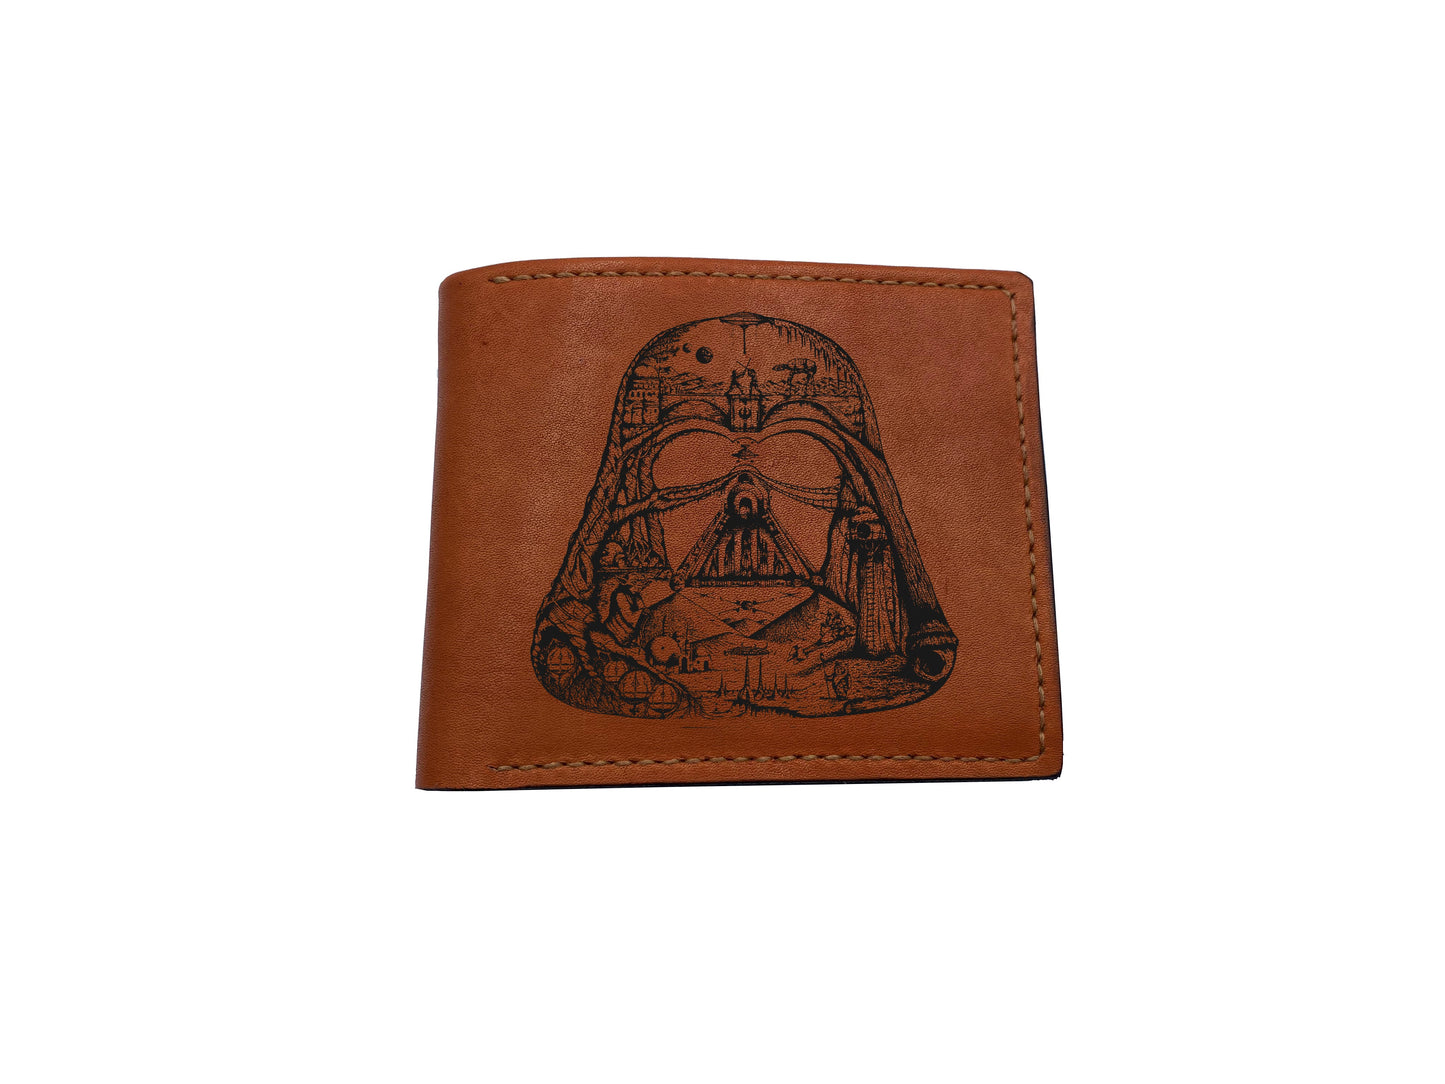 Starwars leather handmade wallet, christmas gift ideas for kid, boyfriend birthday present